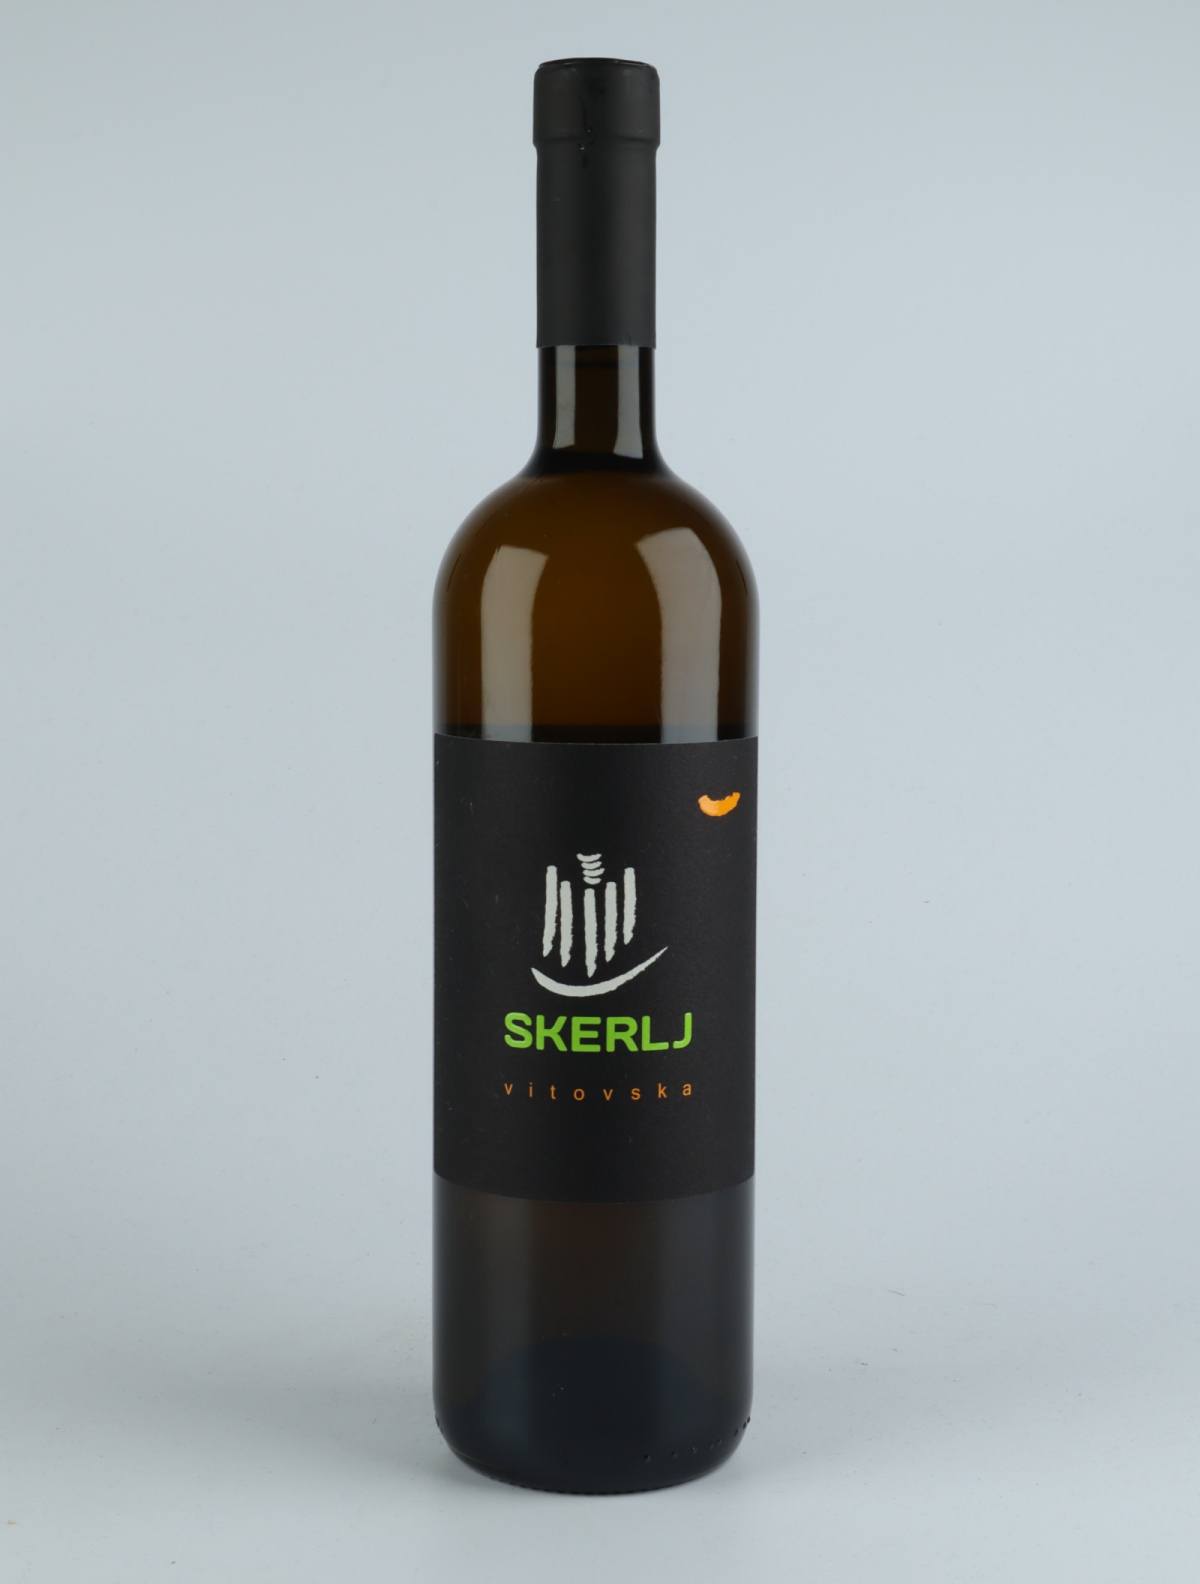 En flaske 2018 Vitovska Orange vin fra Skerlj, Friuli i Italien